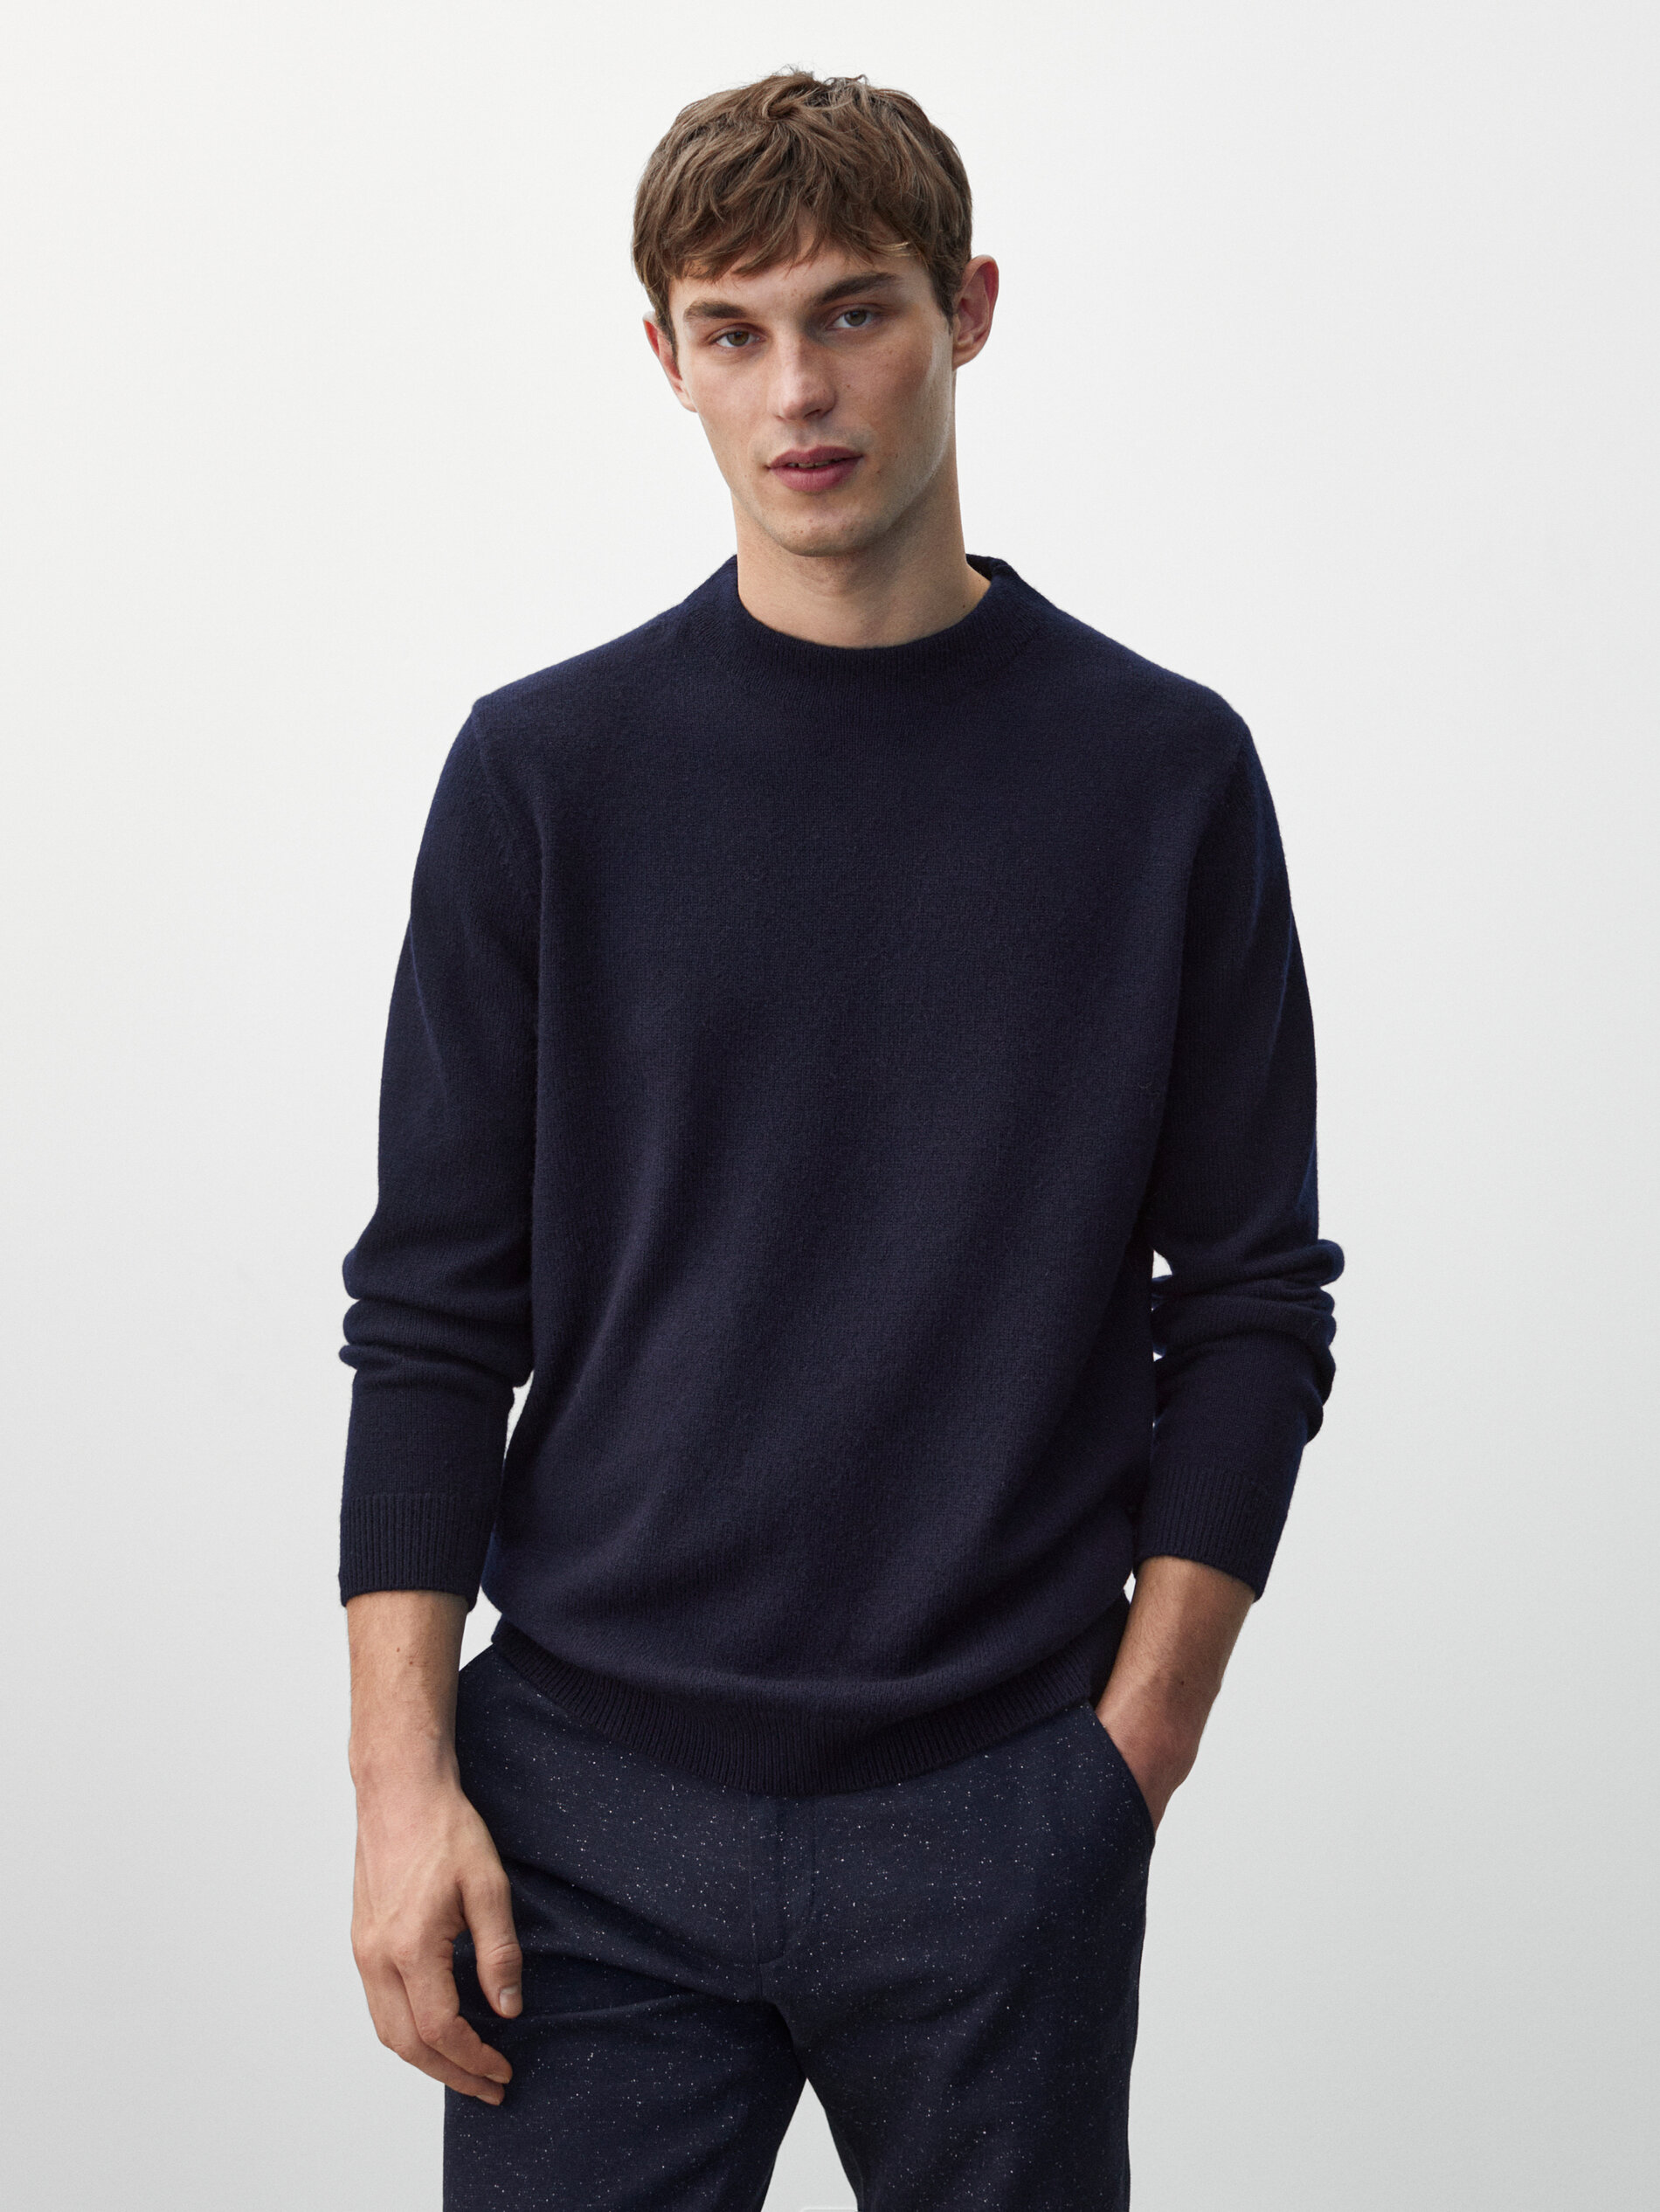 Massimo Dutti - Wool and cashmere mock turtleneck sweater